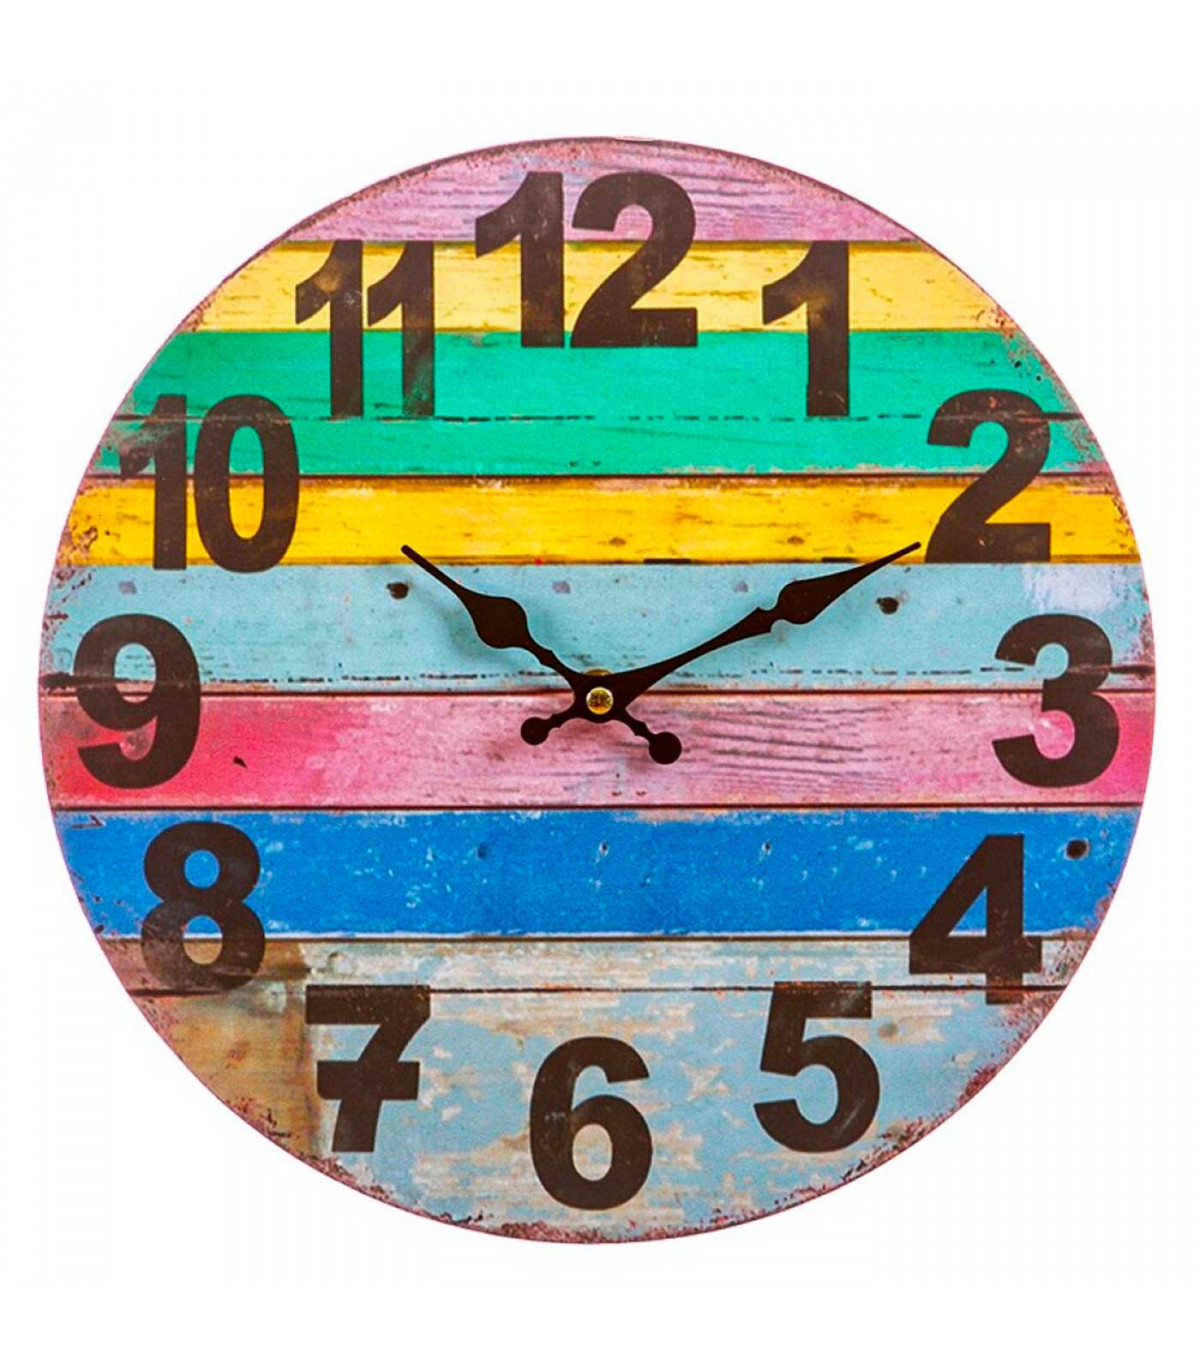 Tradineur - Reloj de pared de madera redondo con números grandes